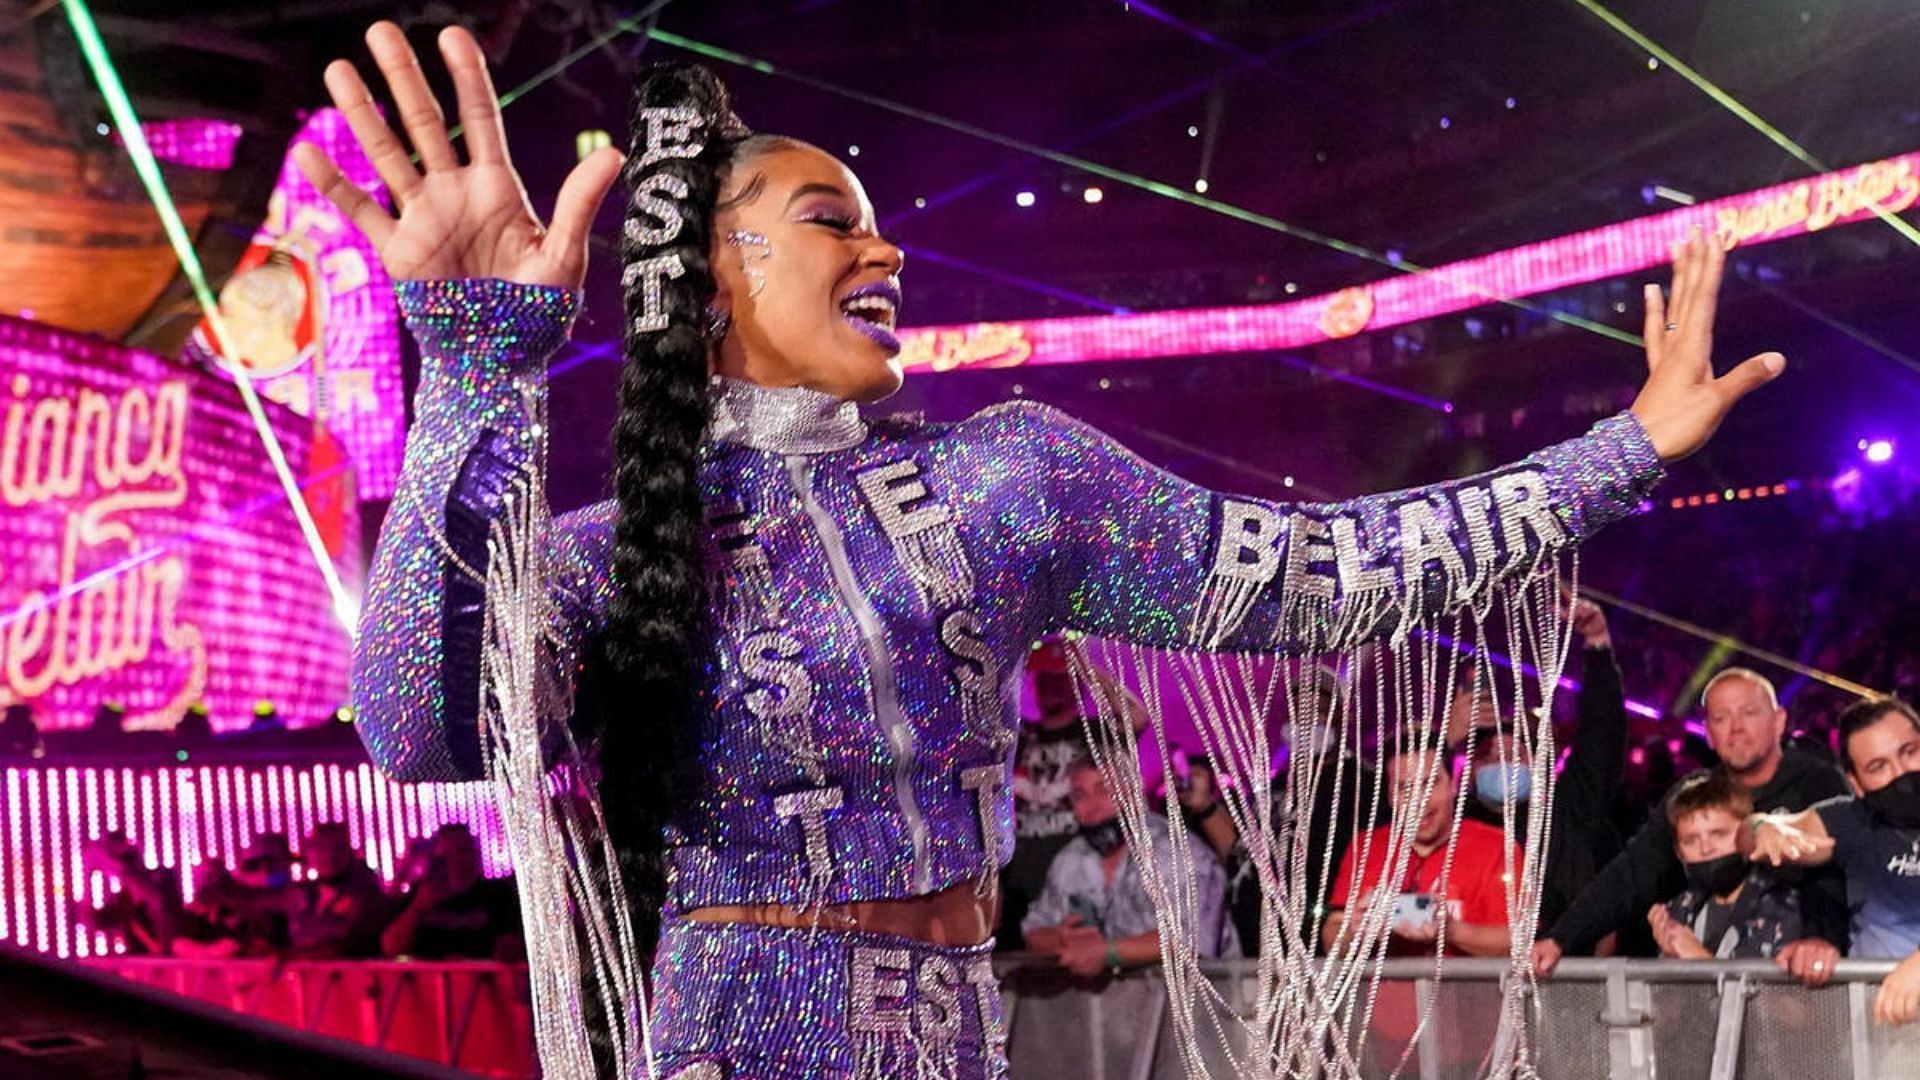 Bianca Belair is the longest reigning WWE RAW Women